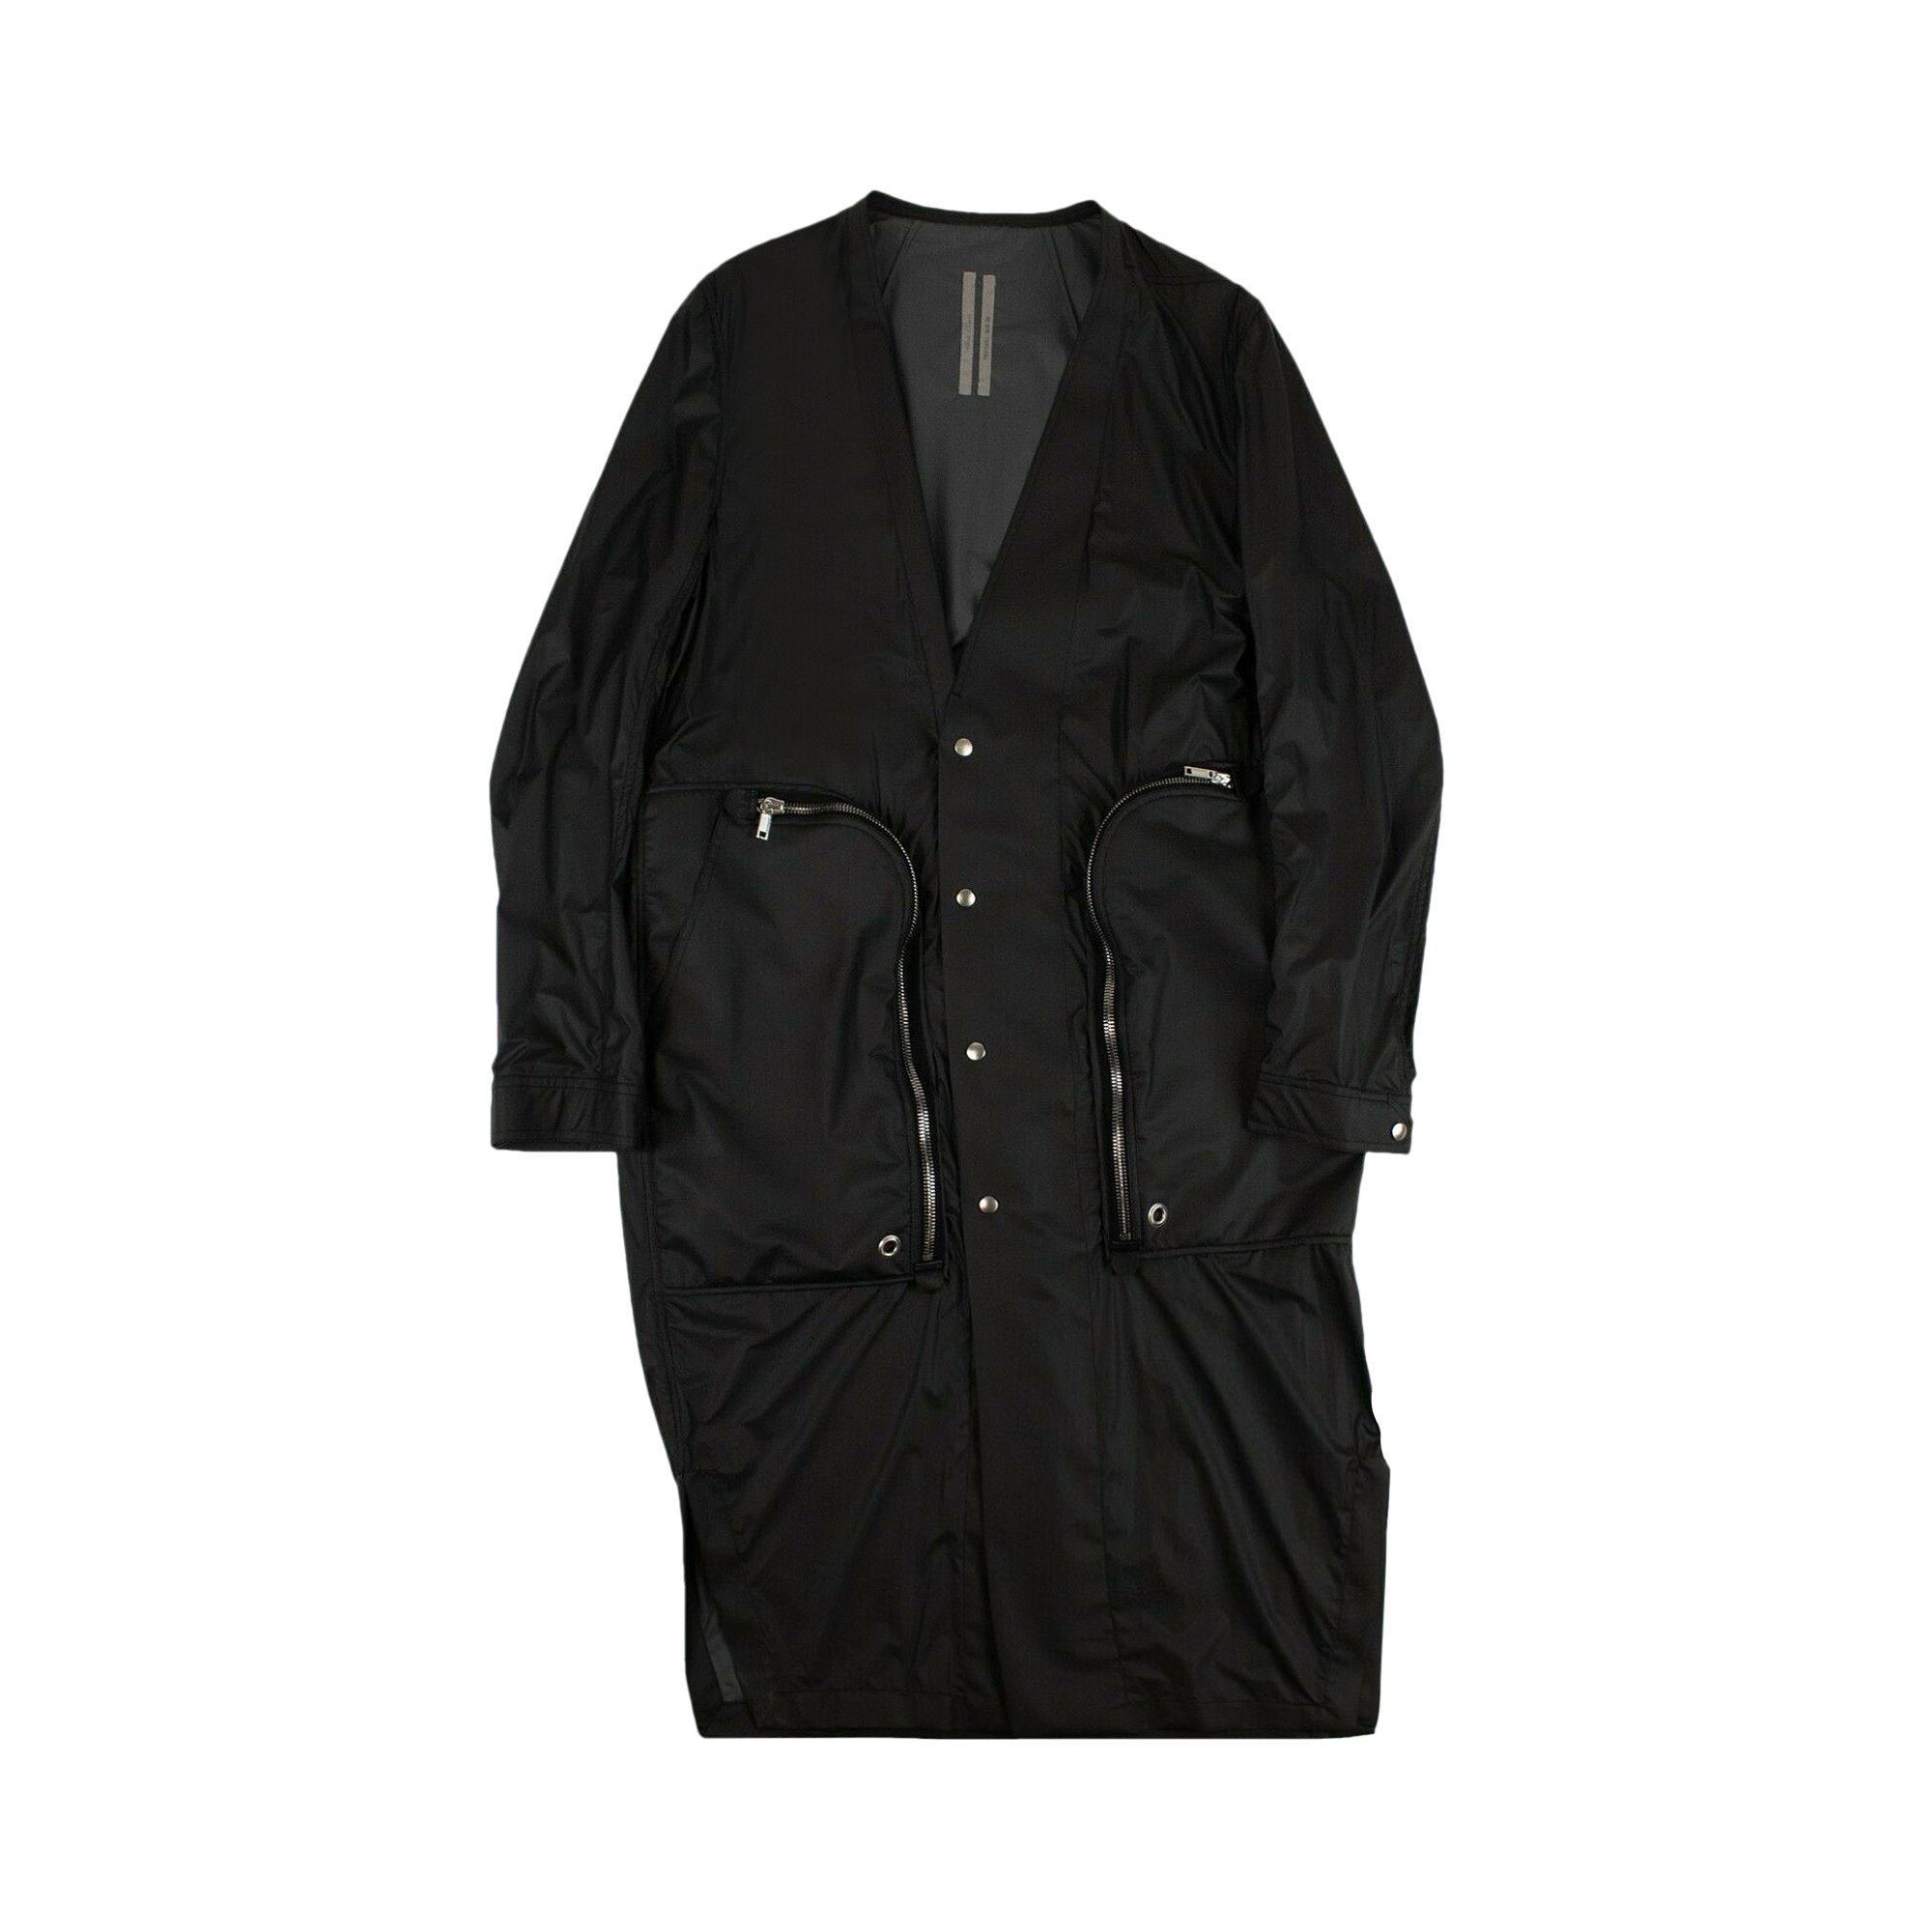 Buy Rick Owens Bauhaus Longline Duster Jacket 'Black' - RR20S7921 